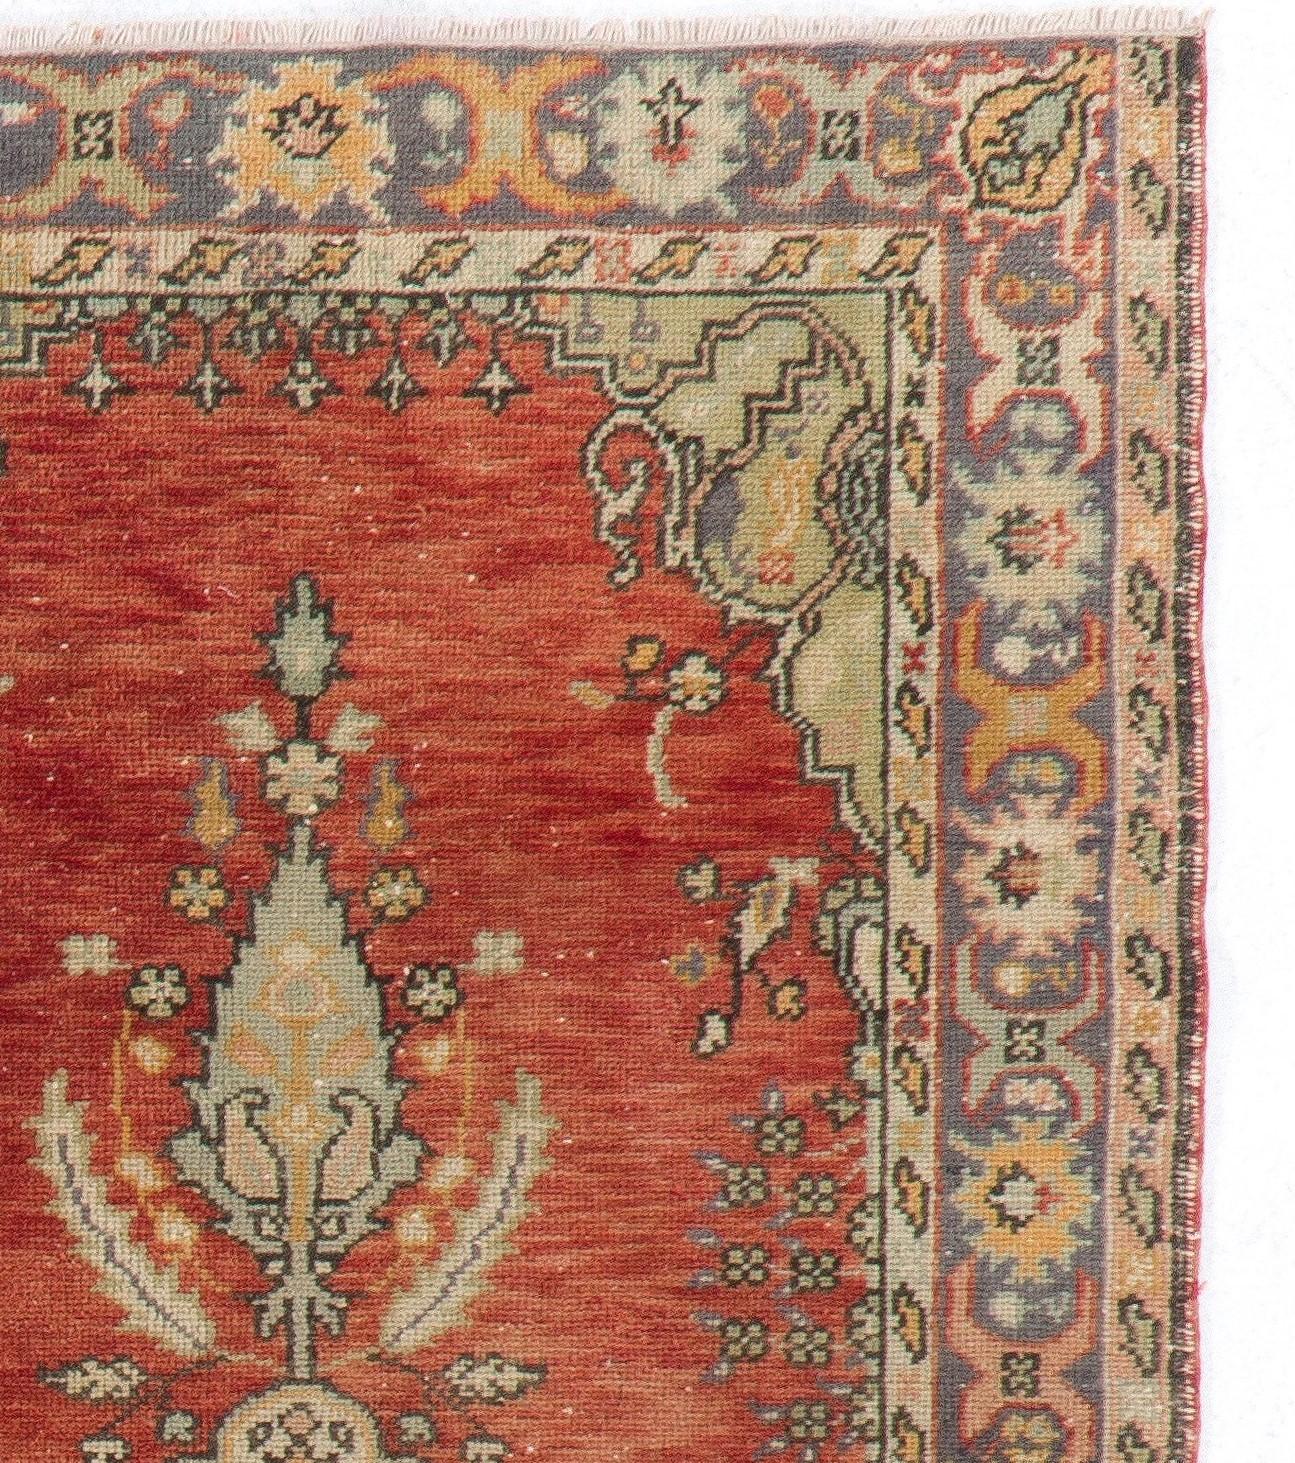 Oushak 3.4x6.5 ft Vintage Handmade Turkish Rug in Warm Red, Beige with Medallion Design